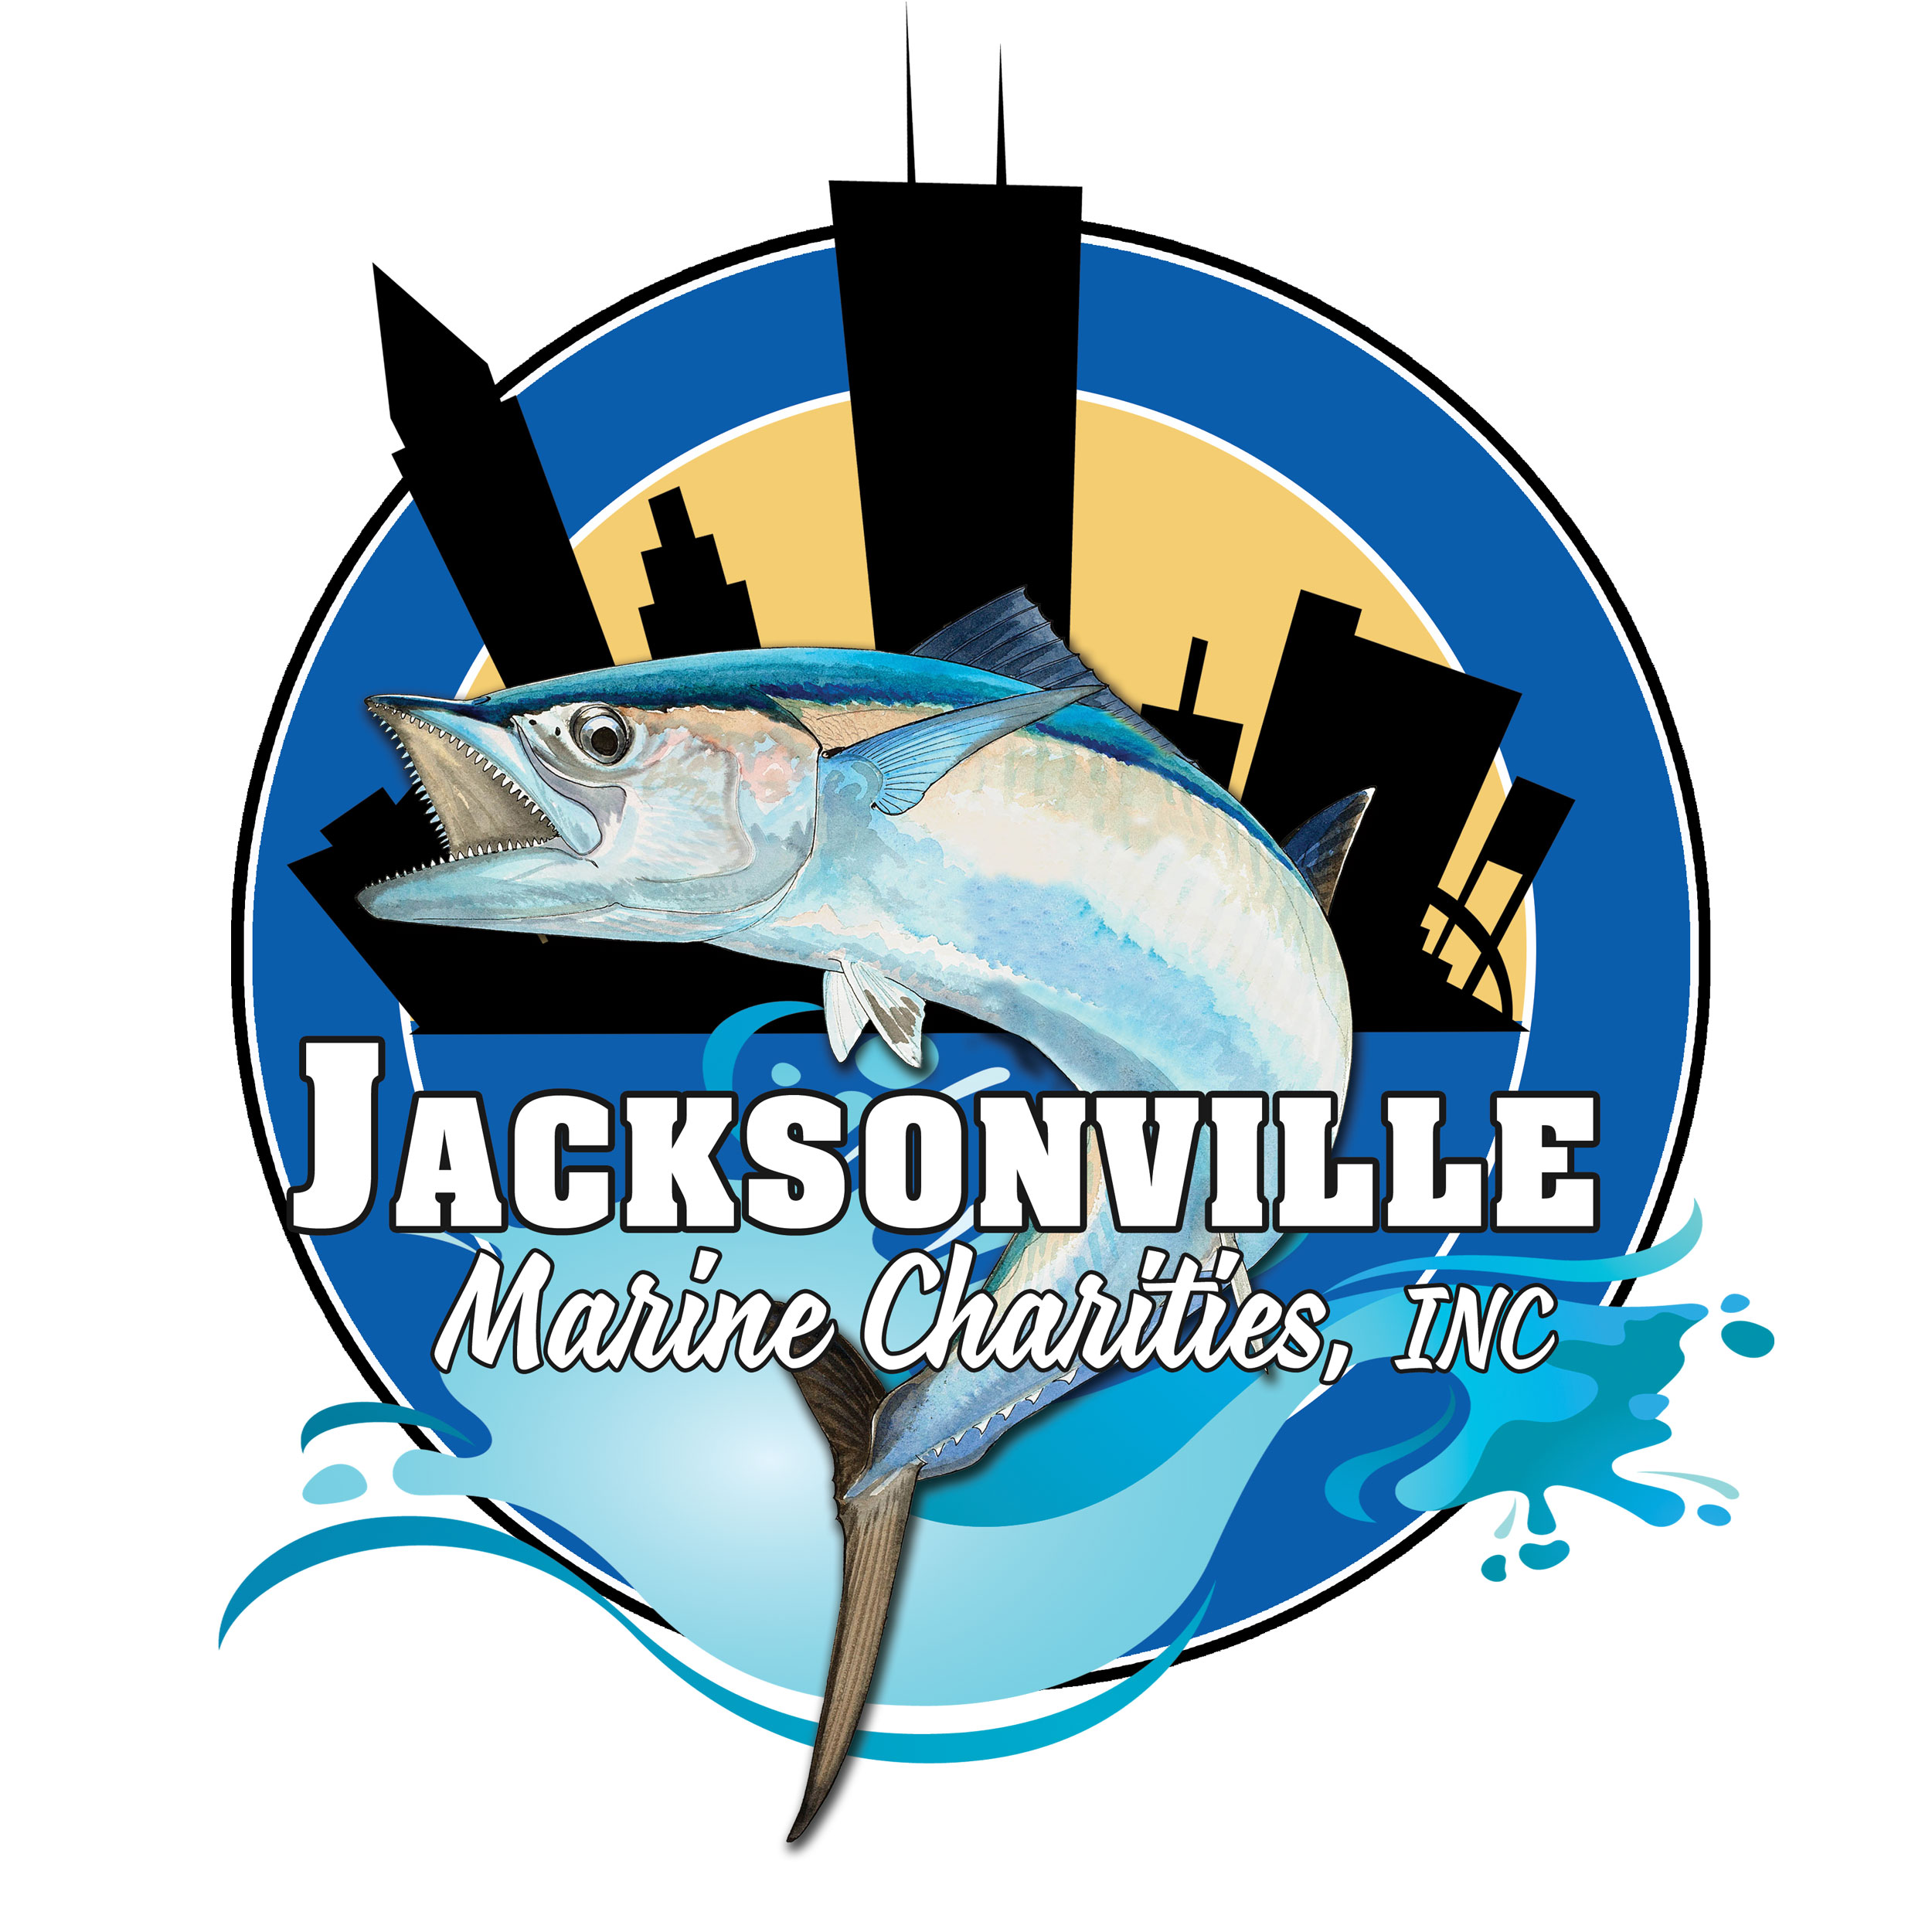 Jacksonville Marine Charities, Inc